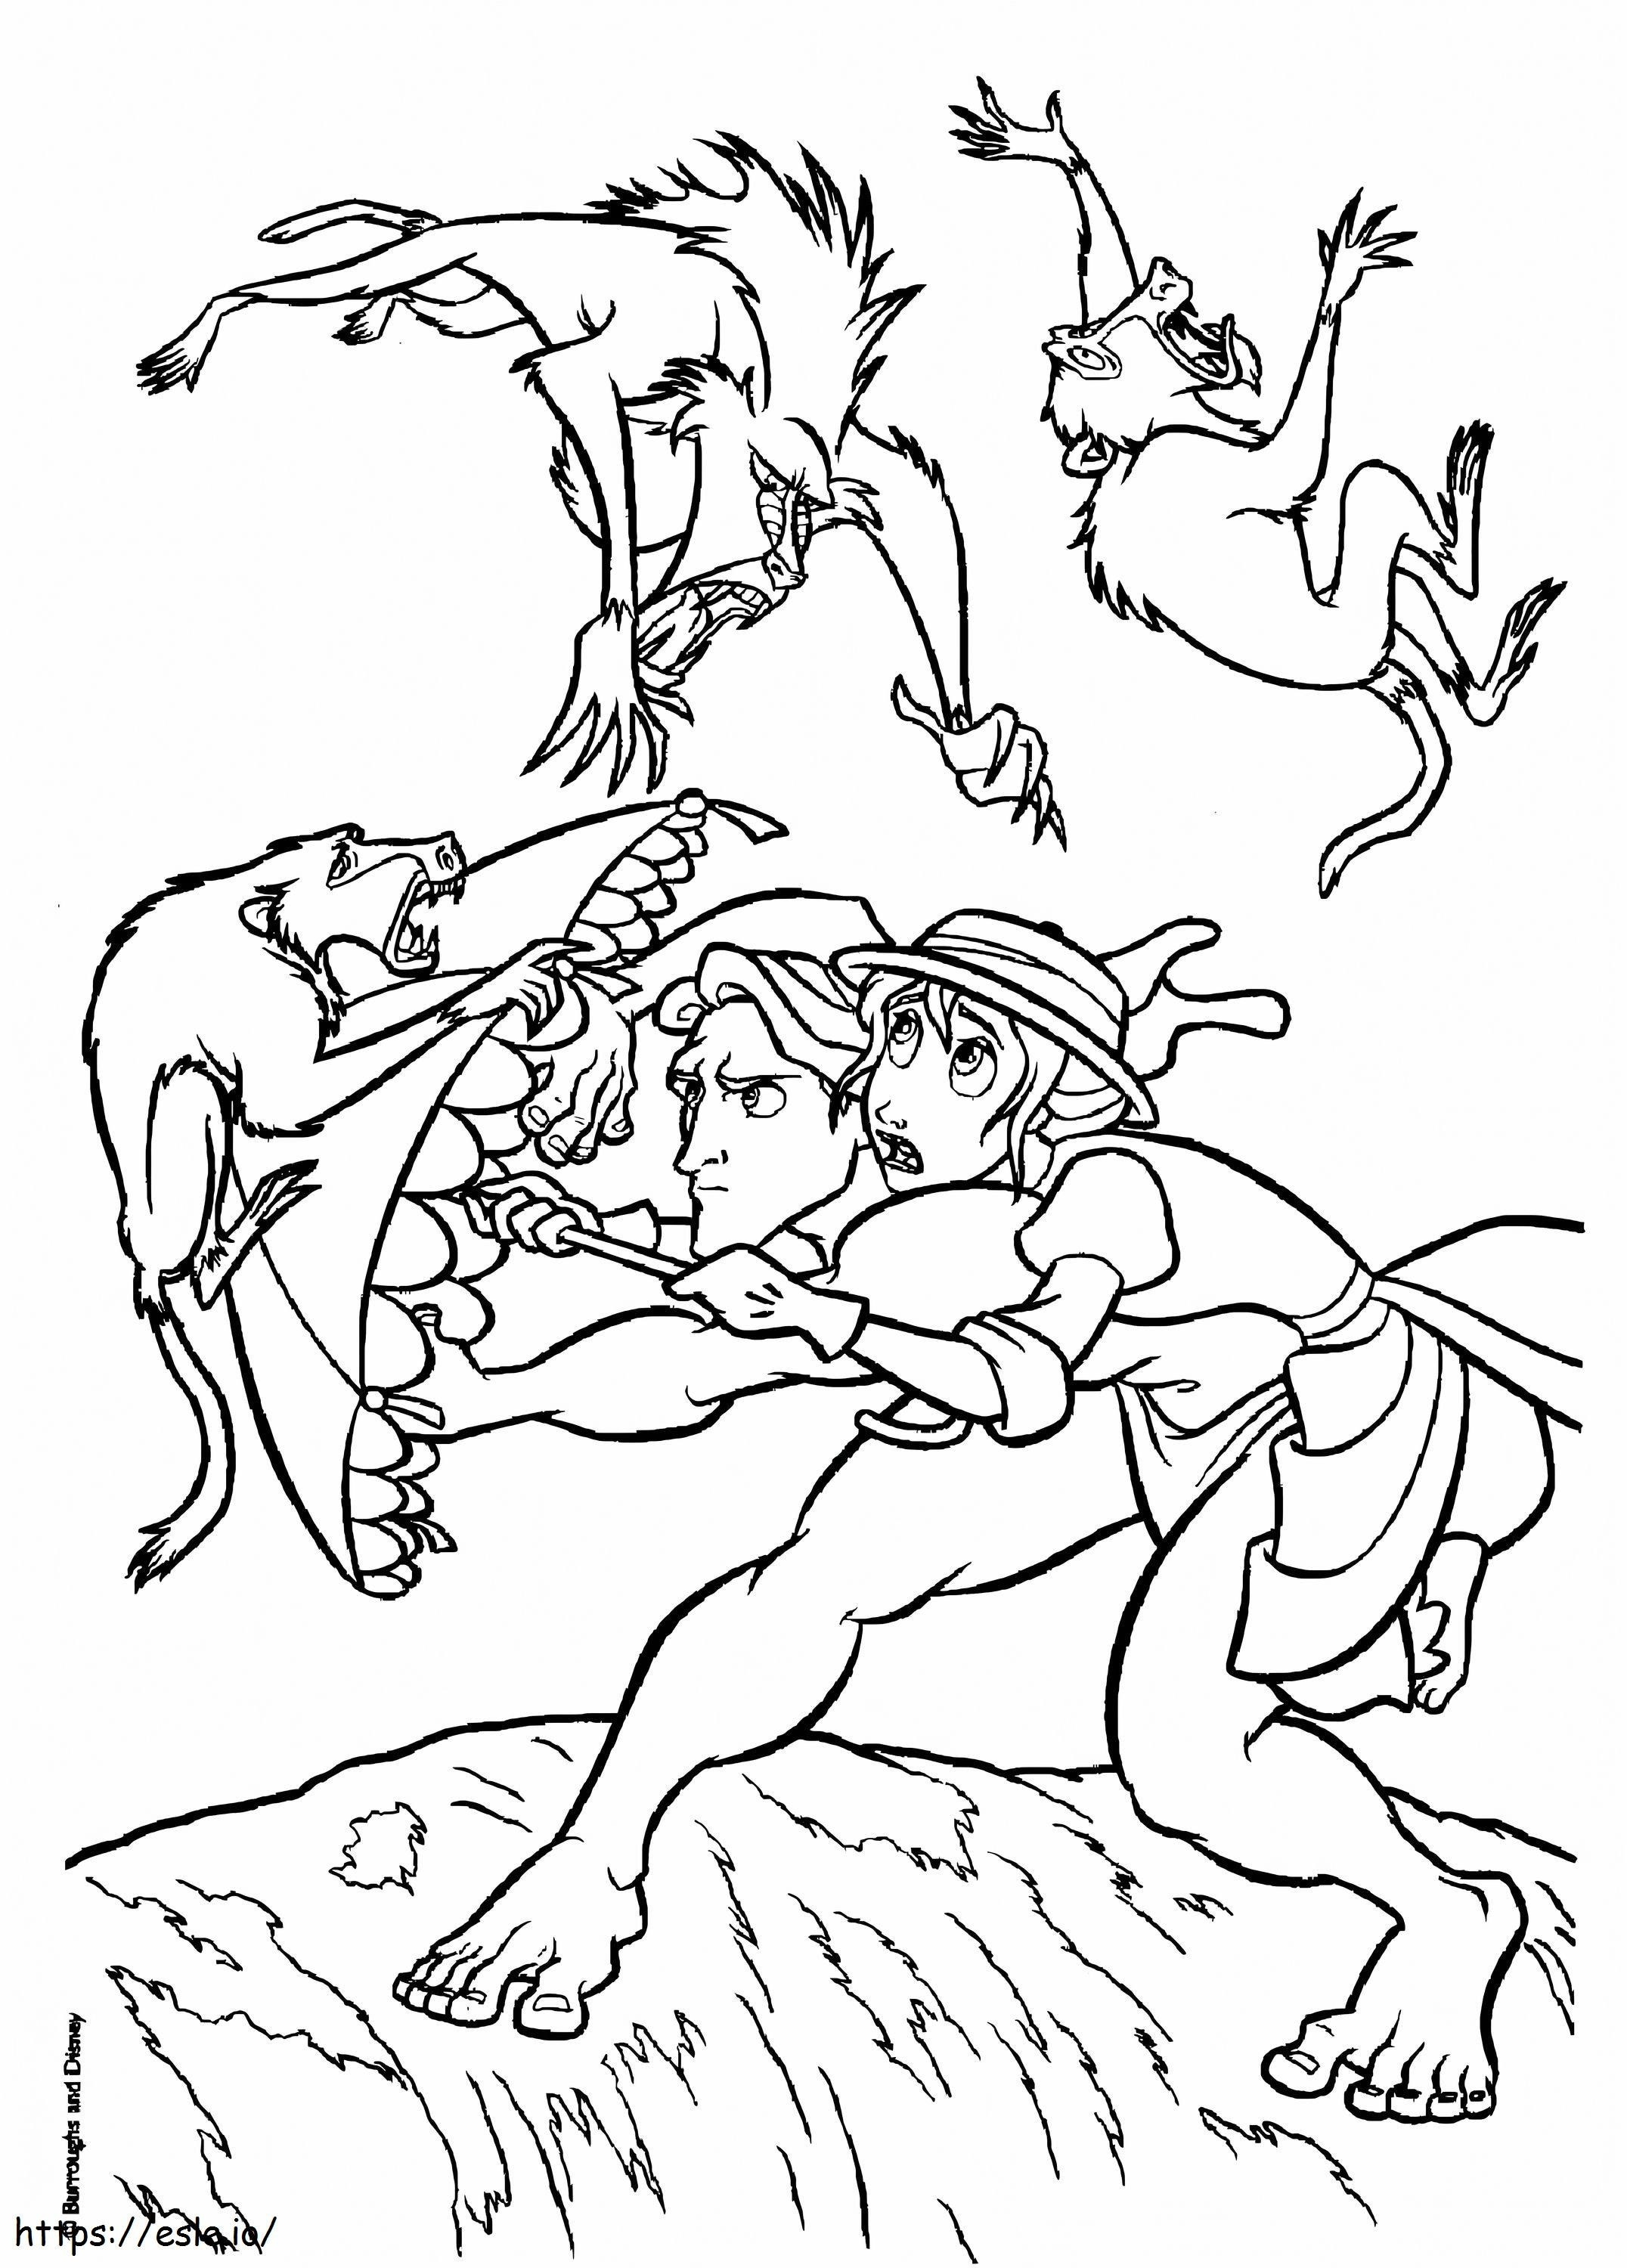 Tarzan And Jane Vs Animals coloring page